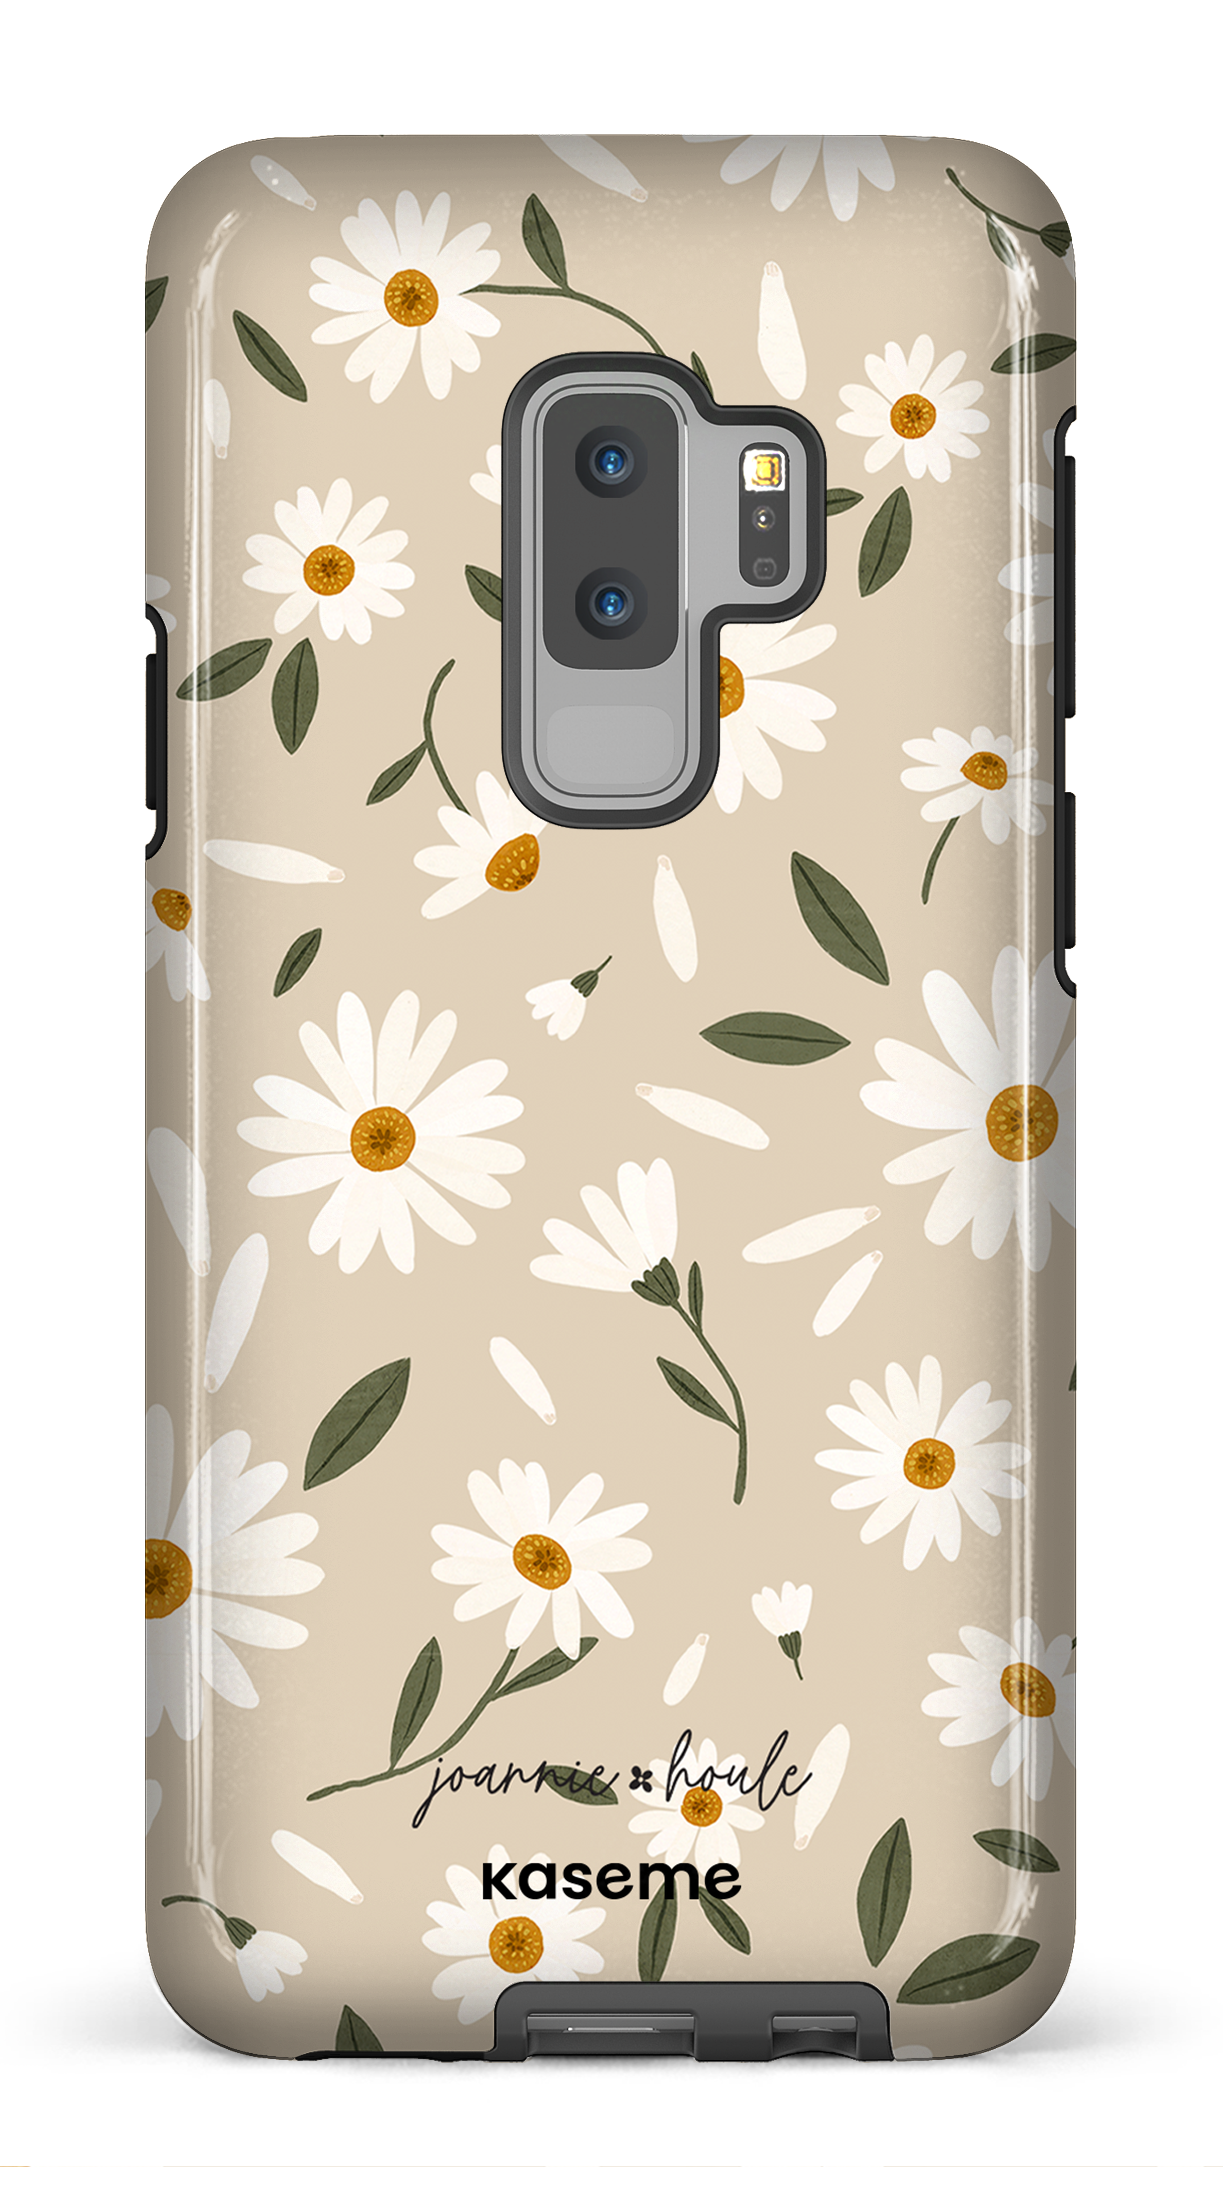 Daisy Bouquet by Joannie Houle - Galaxy S9 Plus